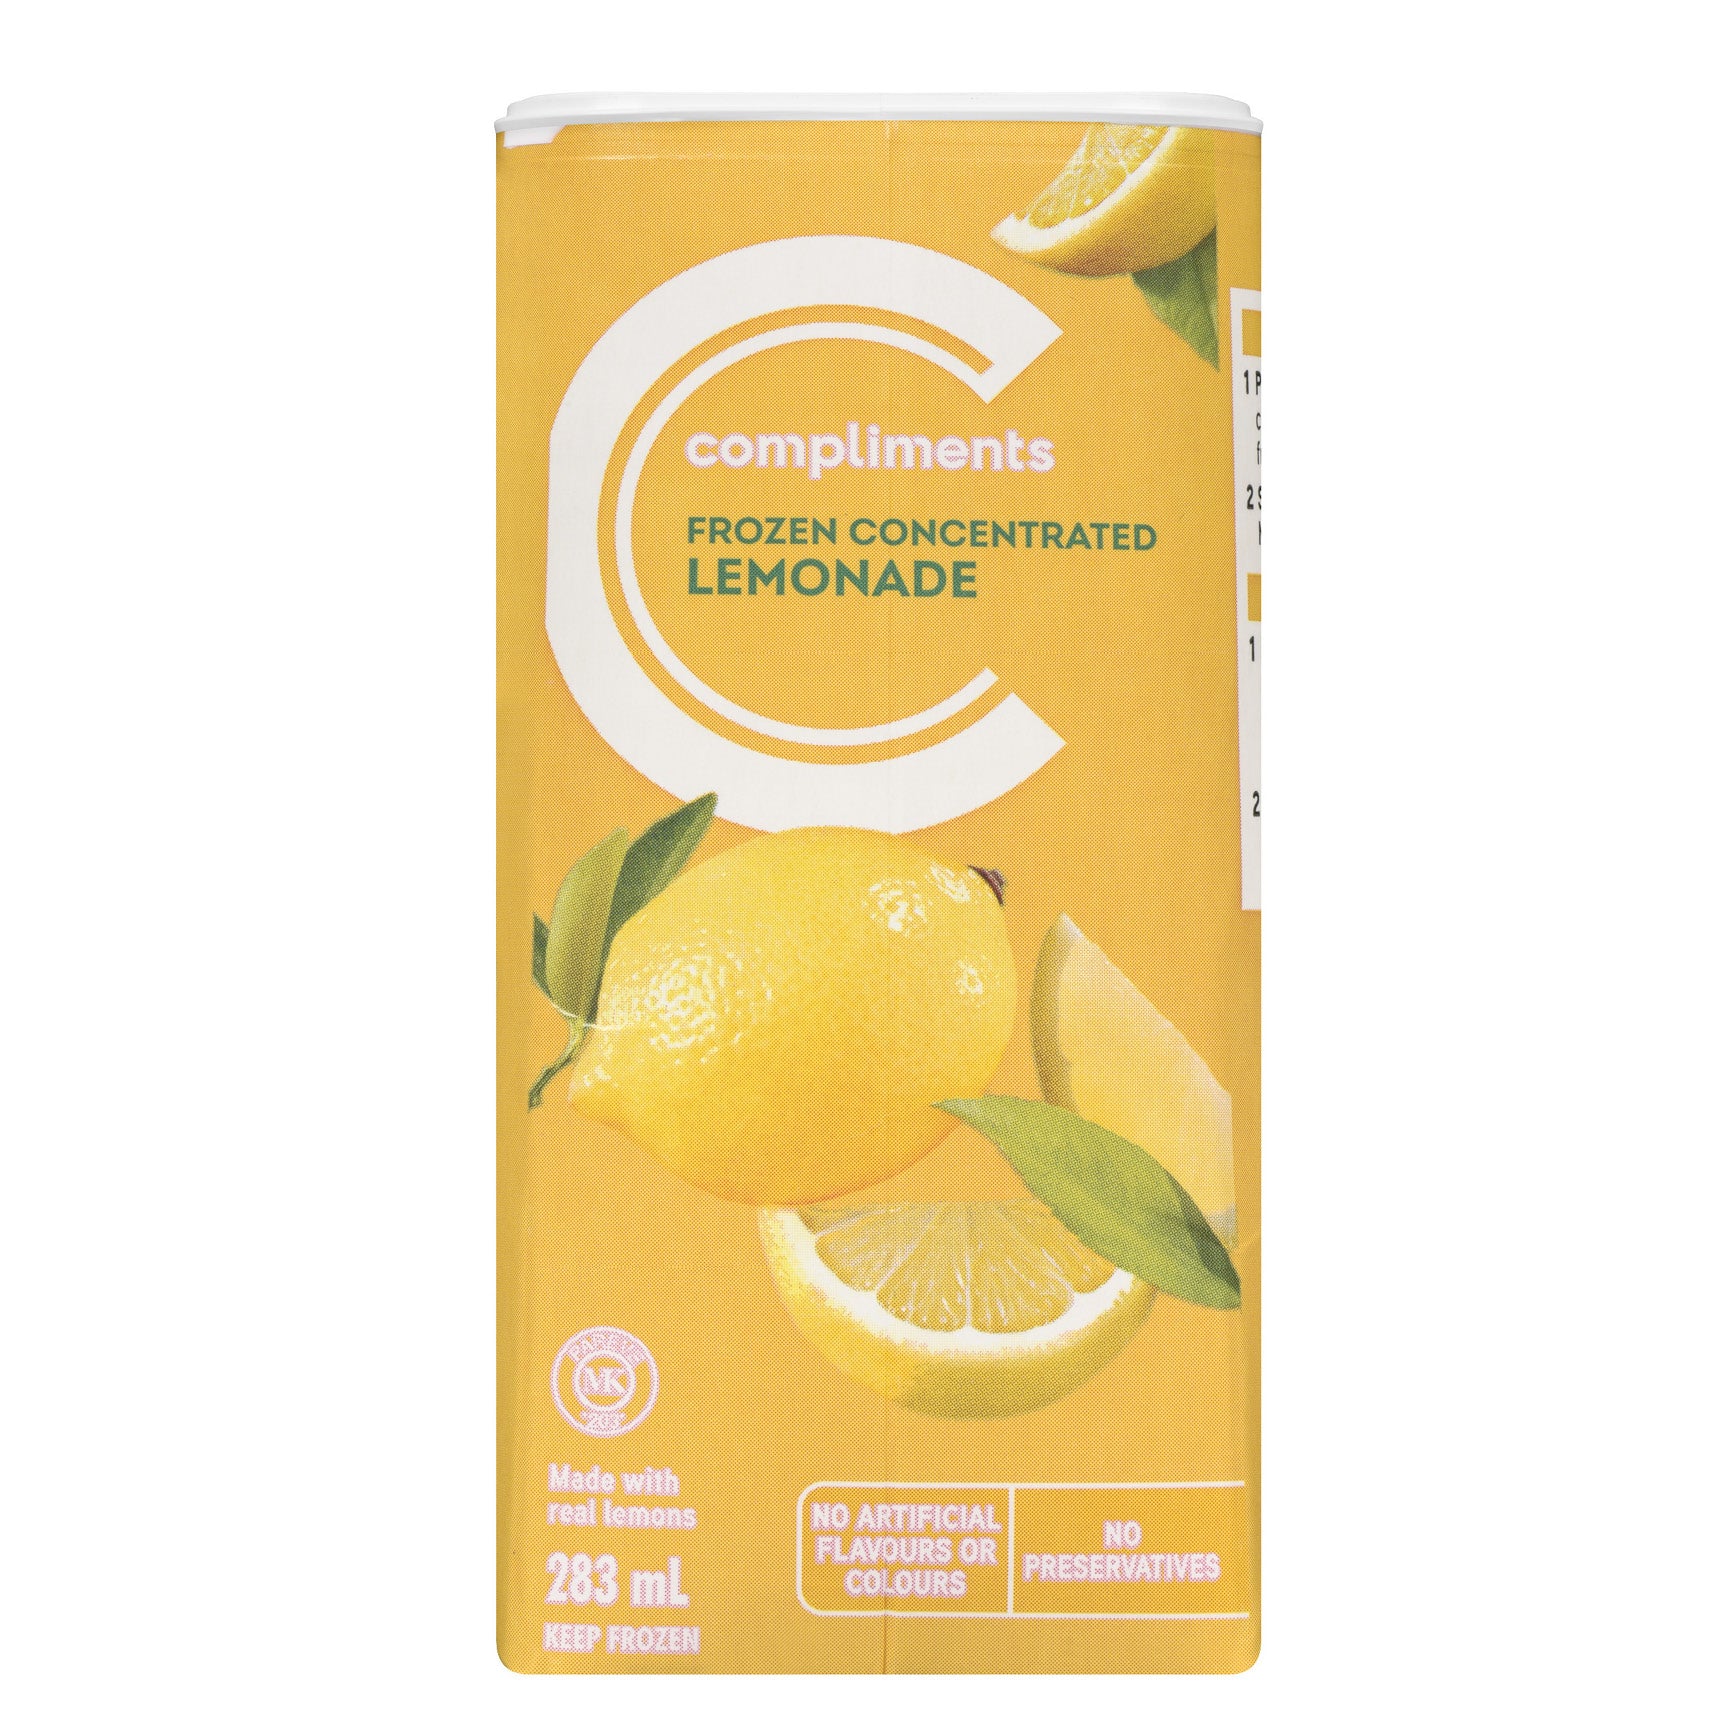 Compliments Frozen Lemonade, 283ml